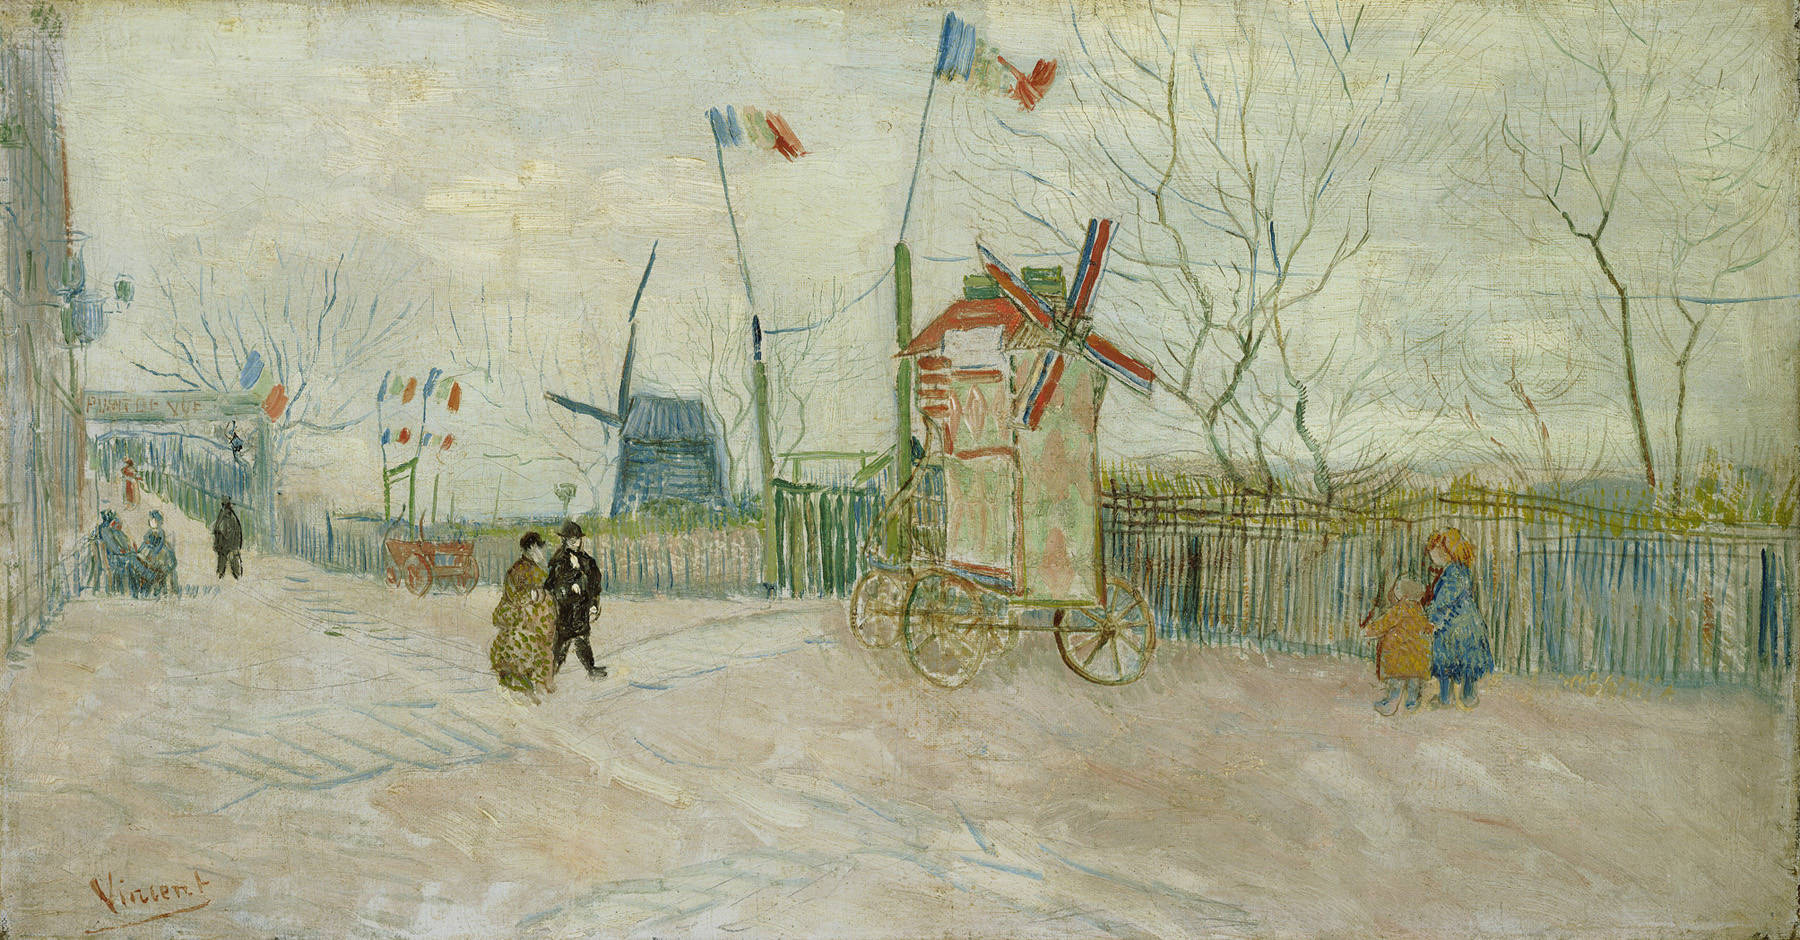 Street Scene in Montmarte - Le Moulin de Poivre by Vincent van Gogh - 1887 - 34.5 x 64.5 cm Van Gogh Museum